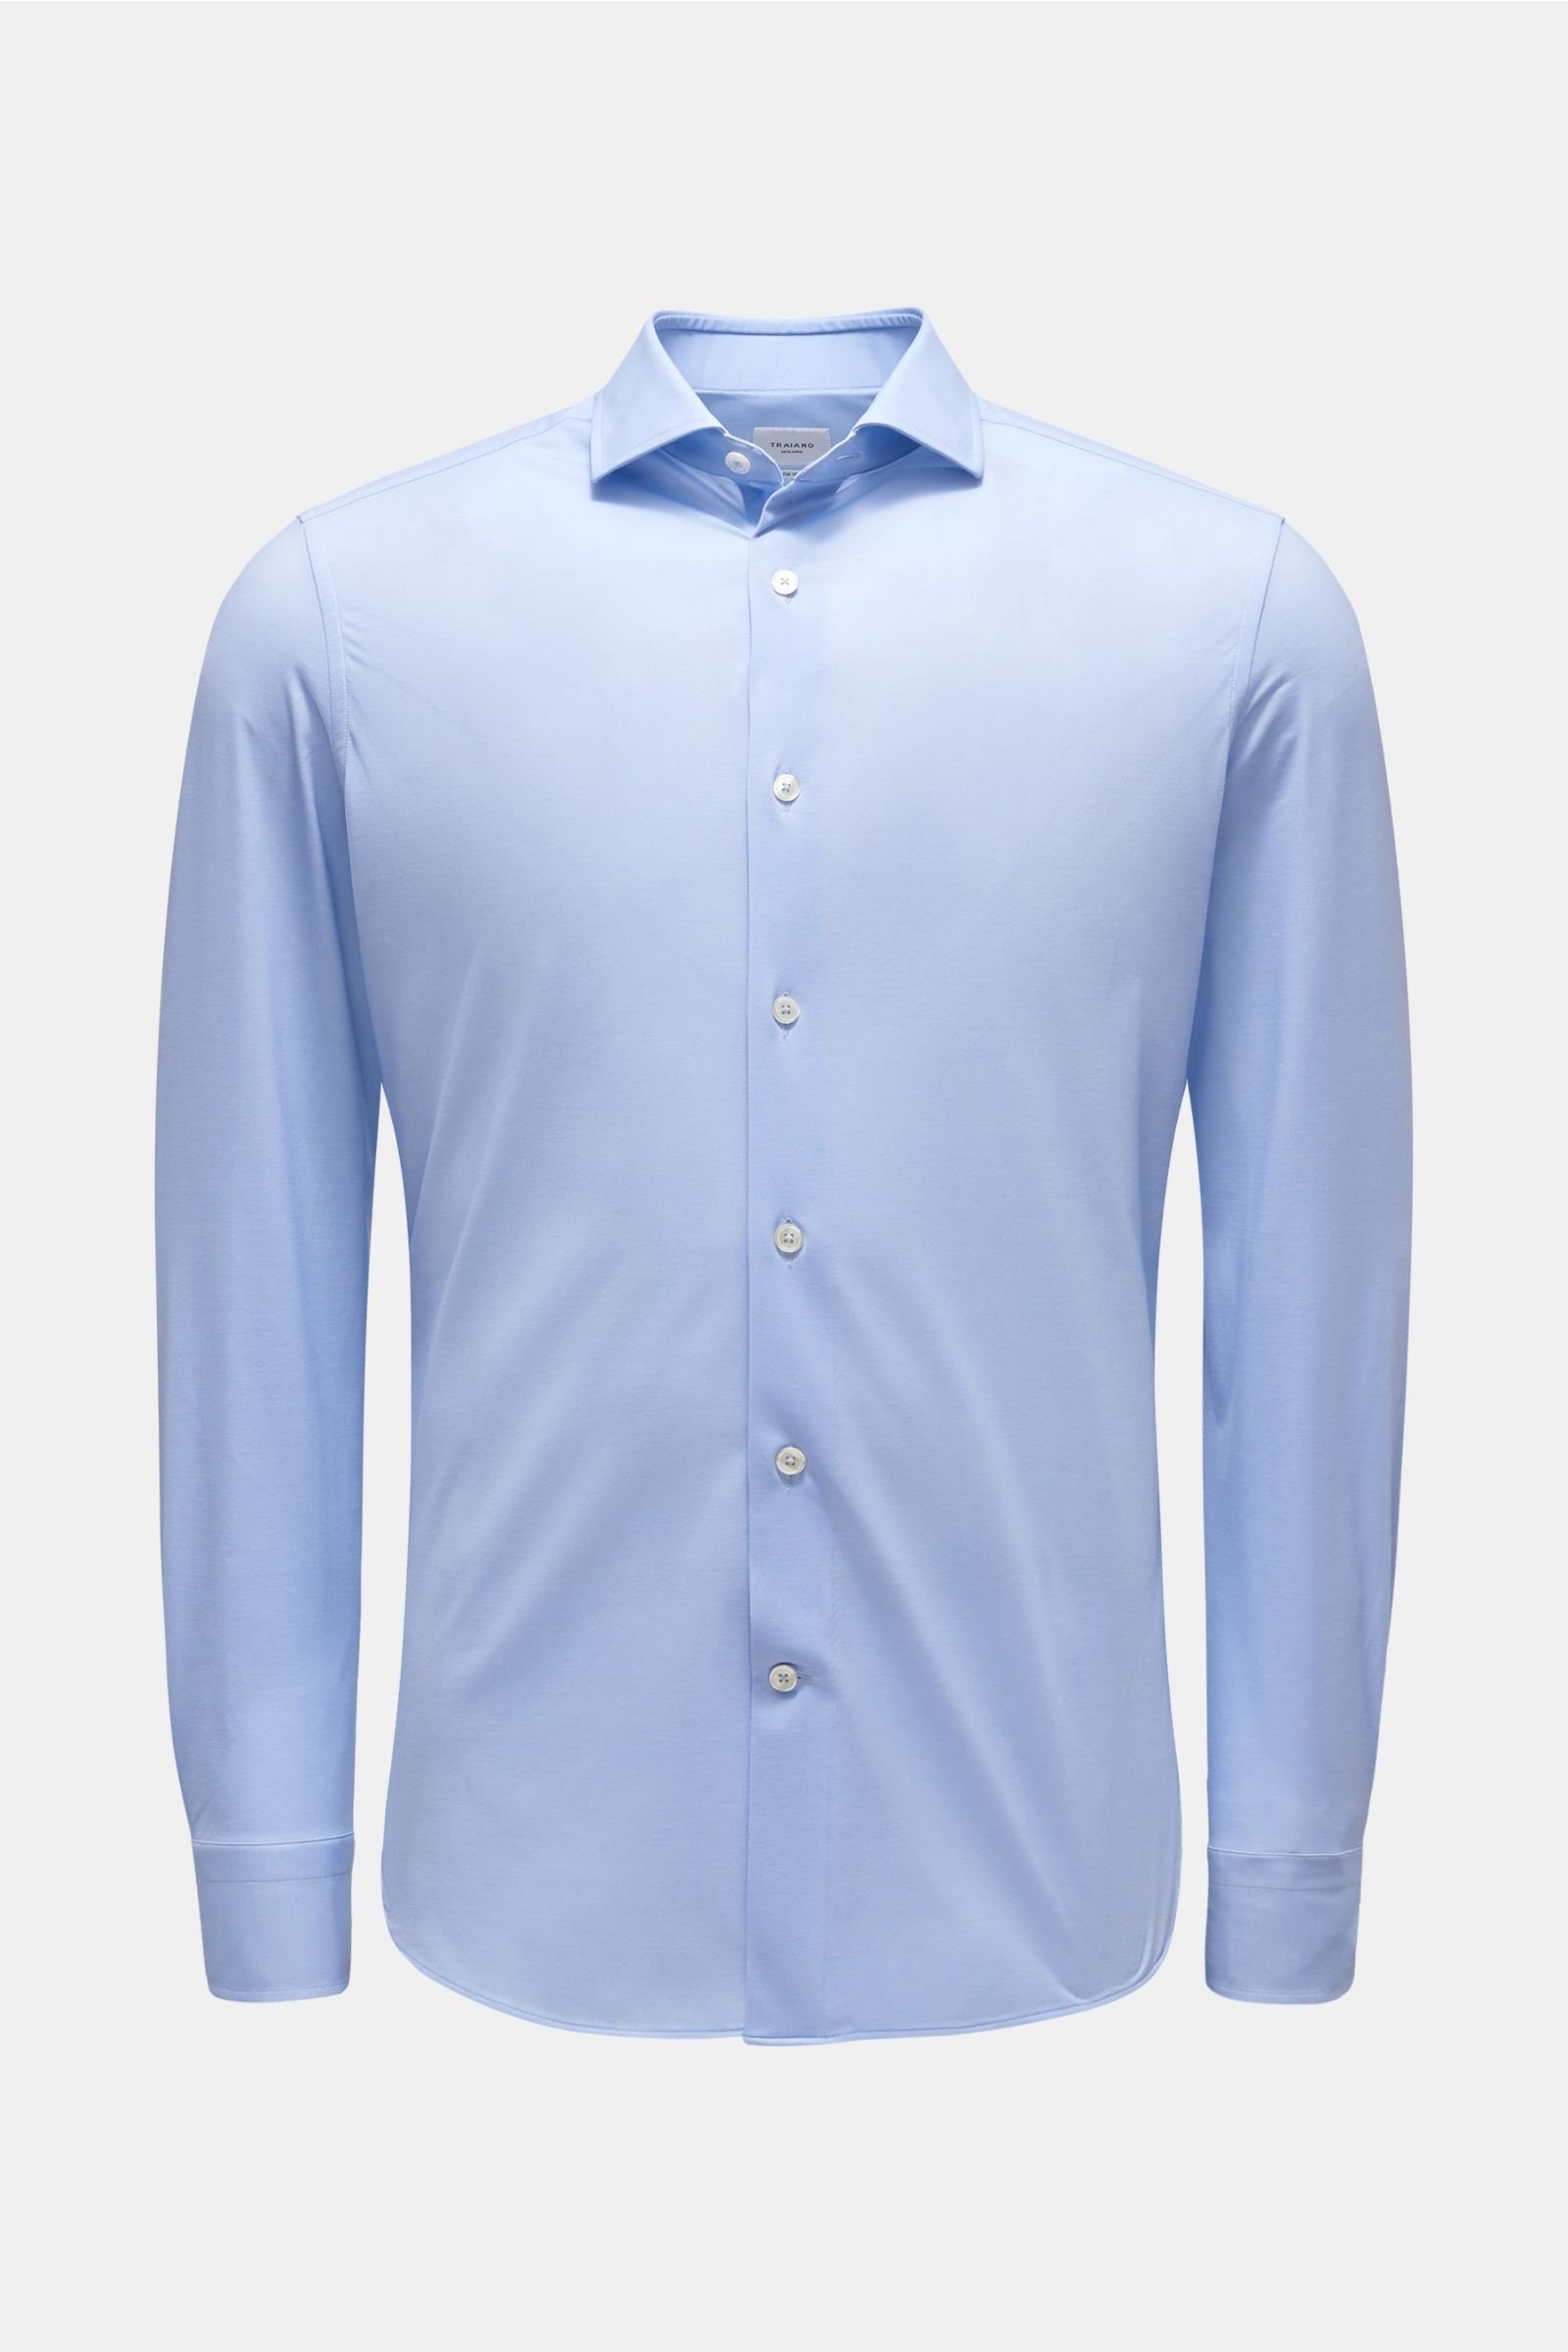 Jersey shirt 'Rossini Radical Shirt' shark collar light blue